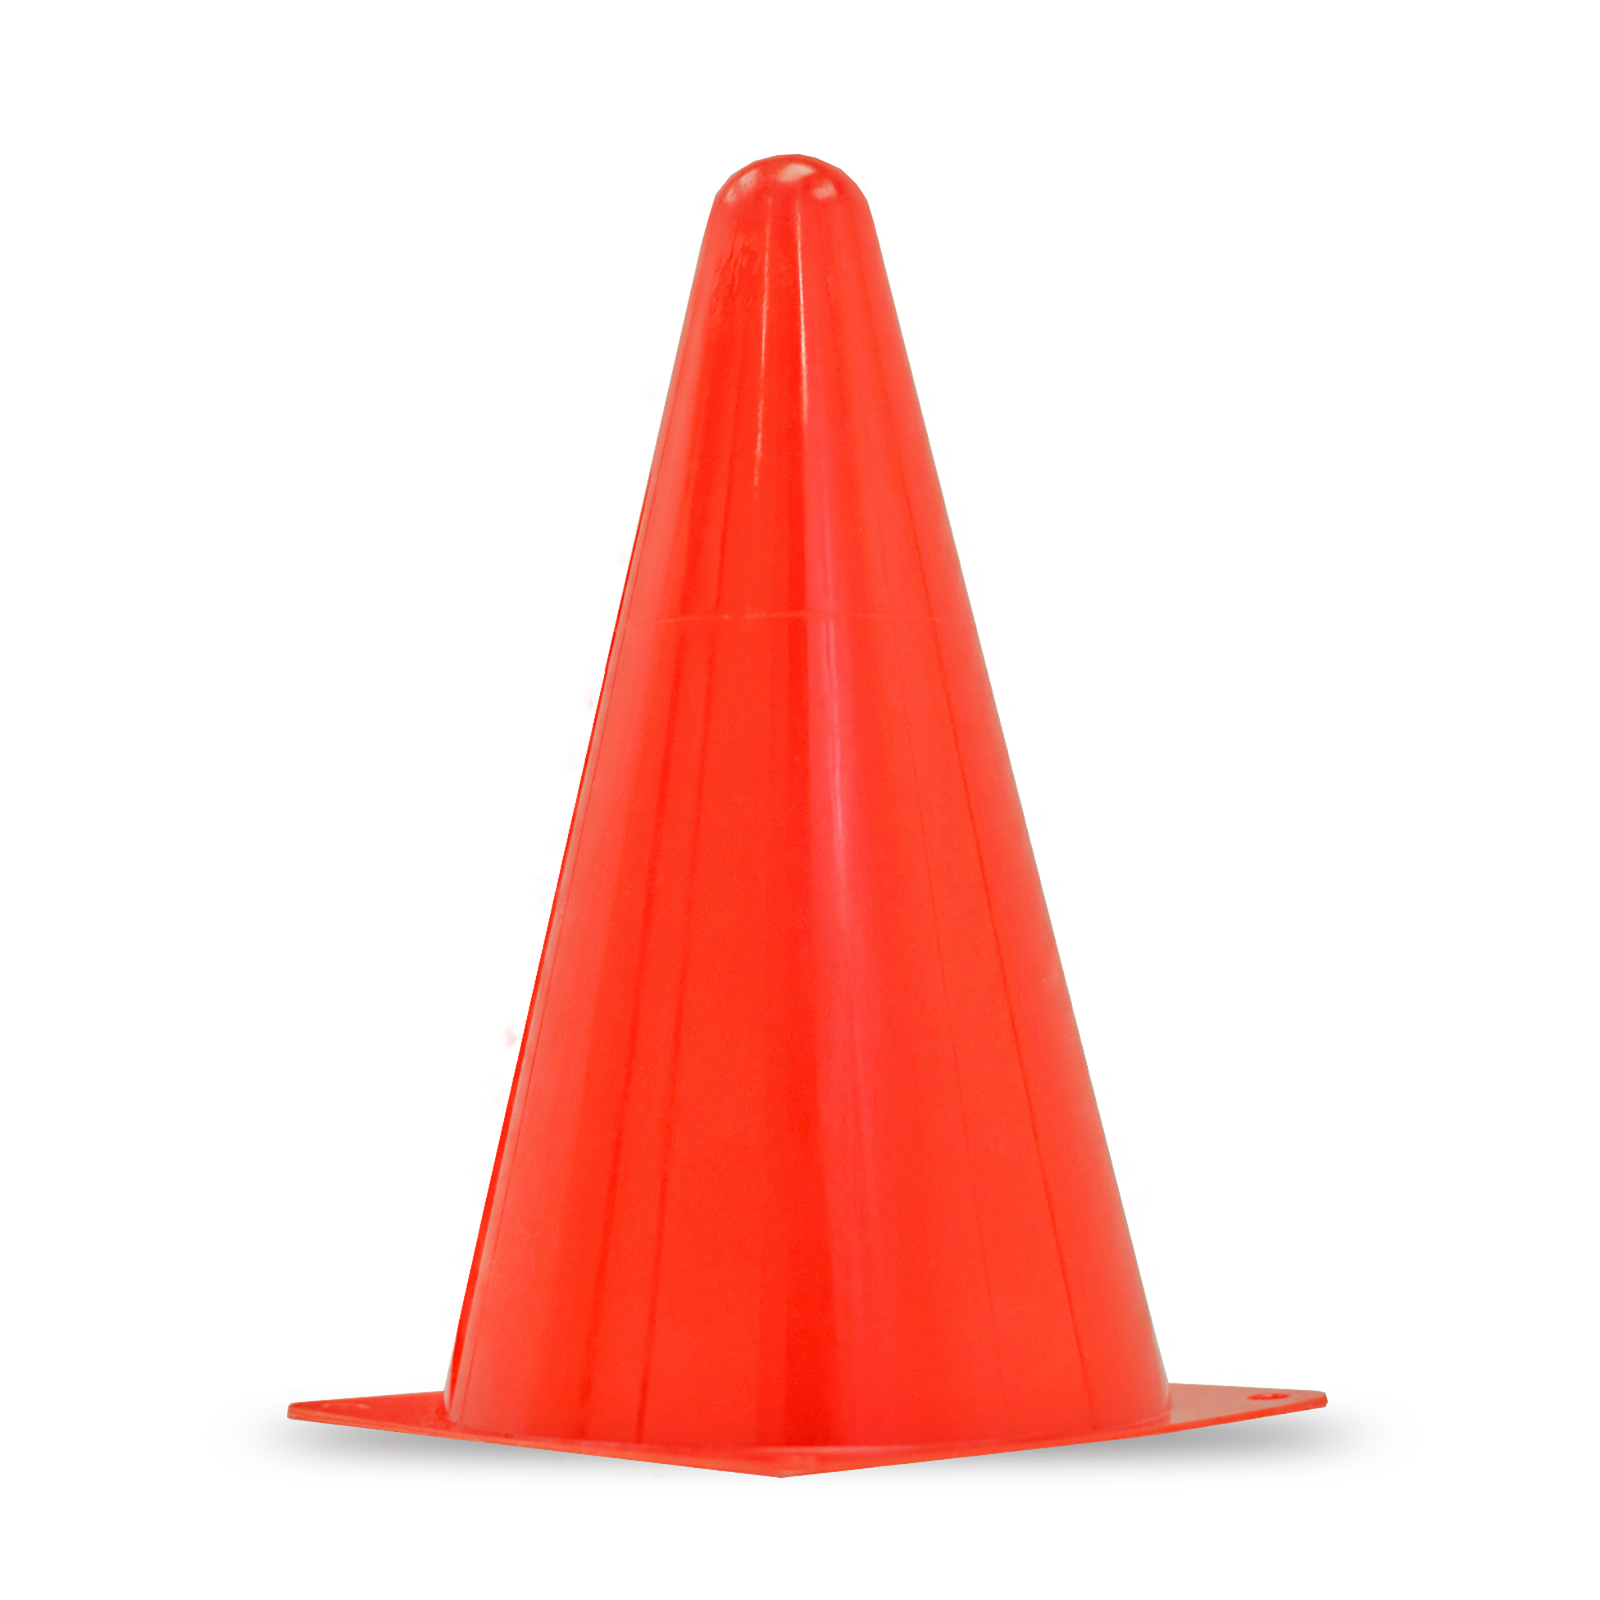 1 JORESTECH hi vis orange sport training cone